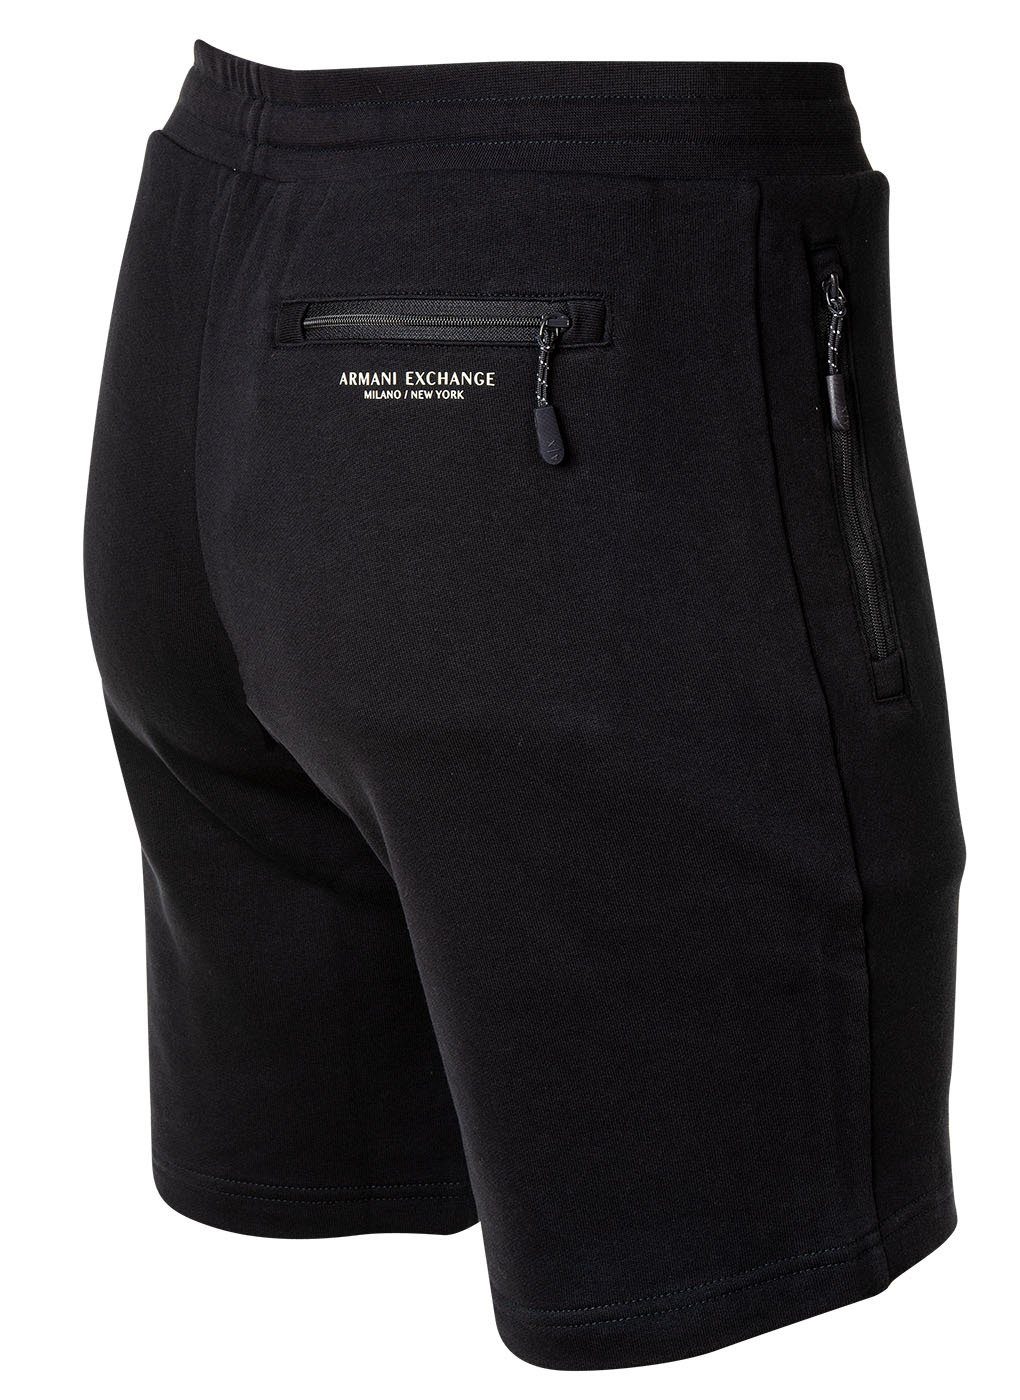 Jogginghose Sweatshorts ARMANI EXCHANGE Loungewear Marine Pants, - Herren kurz